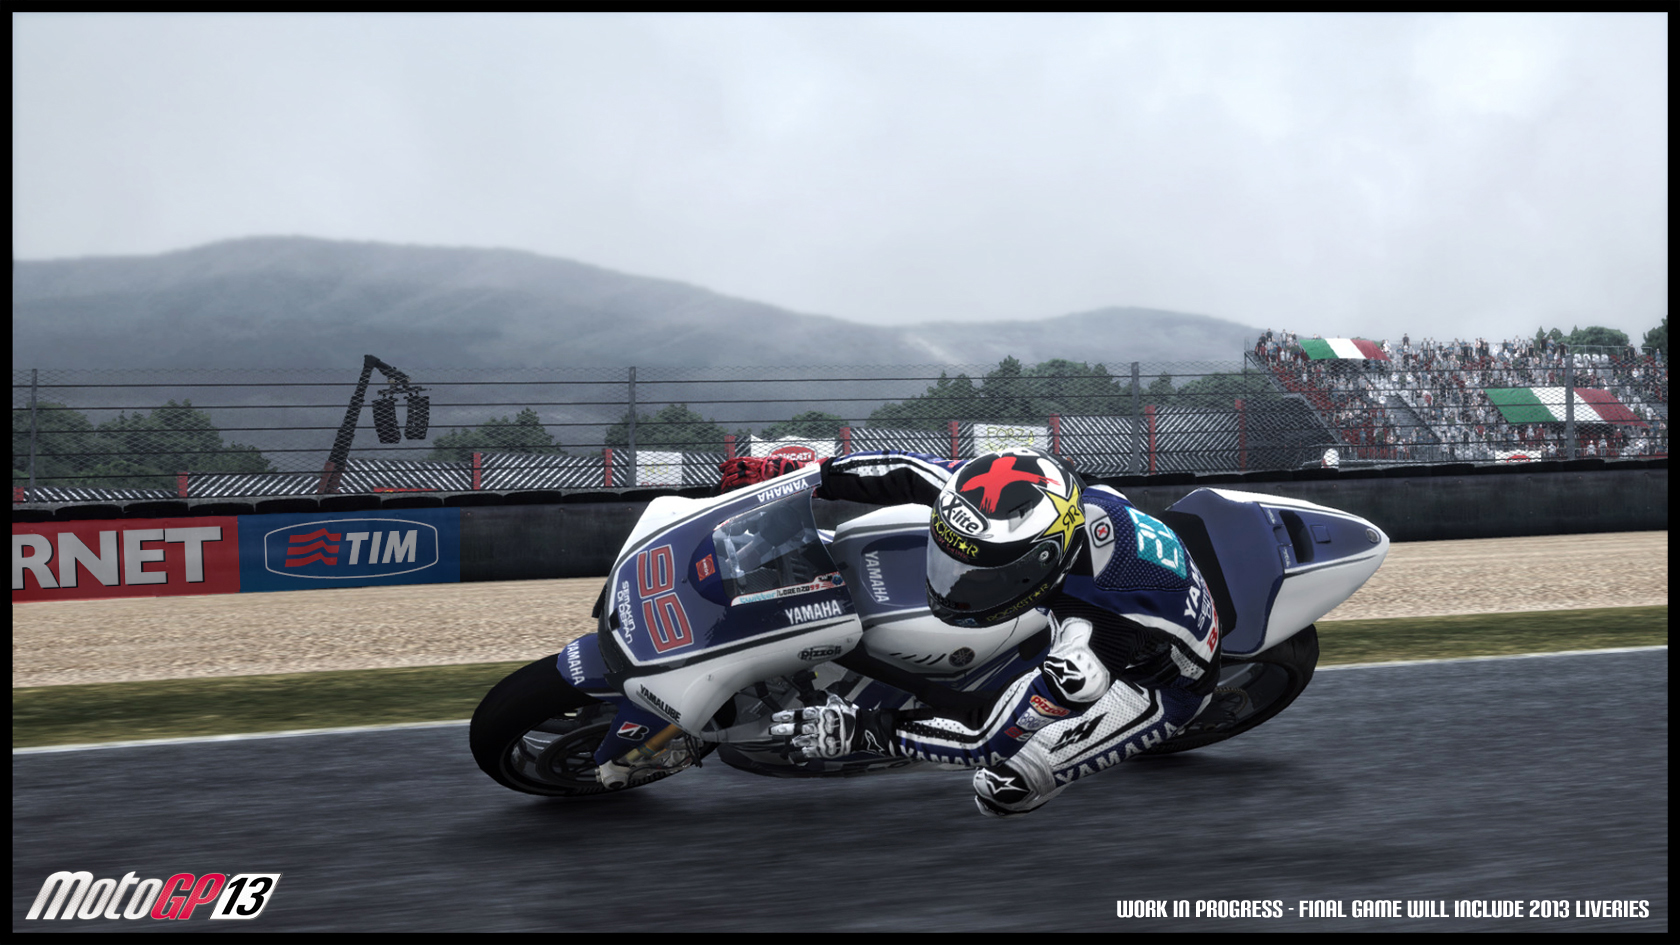 Nadjeżdża demo MotoGP 13